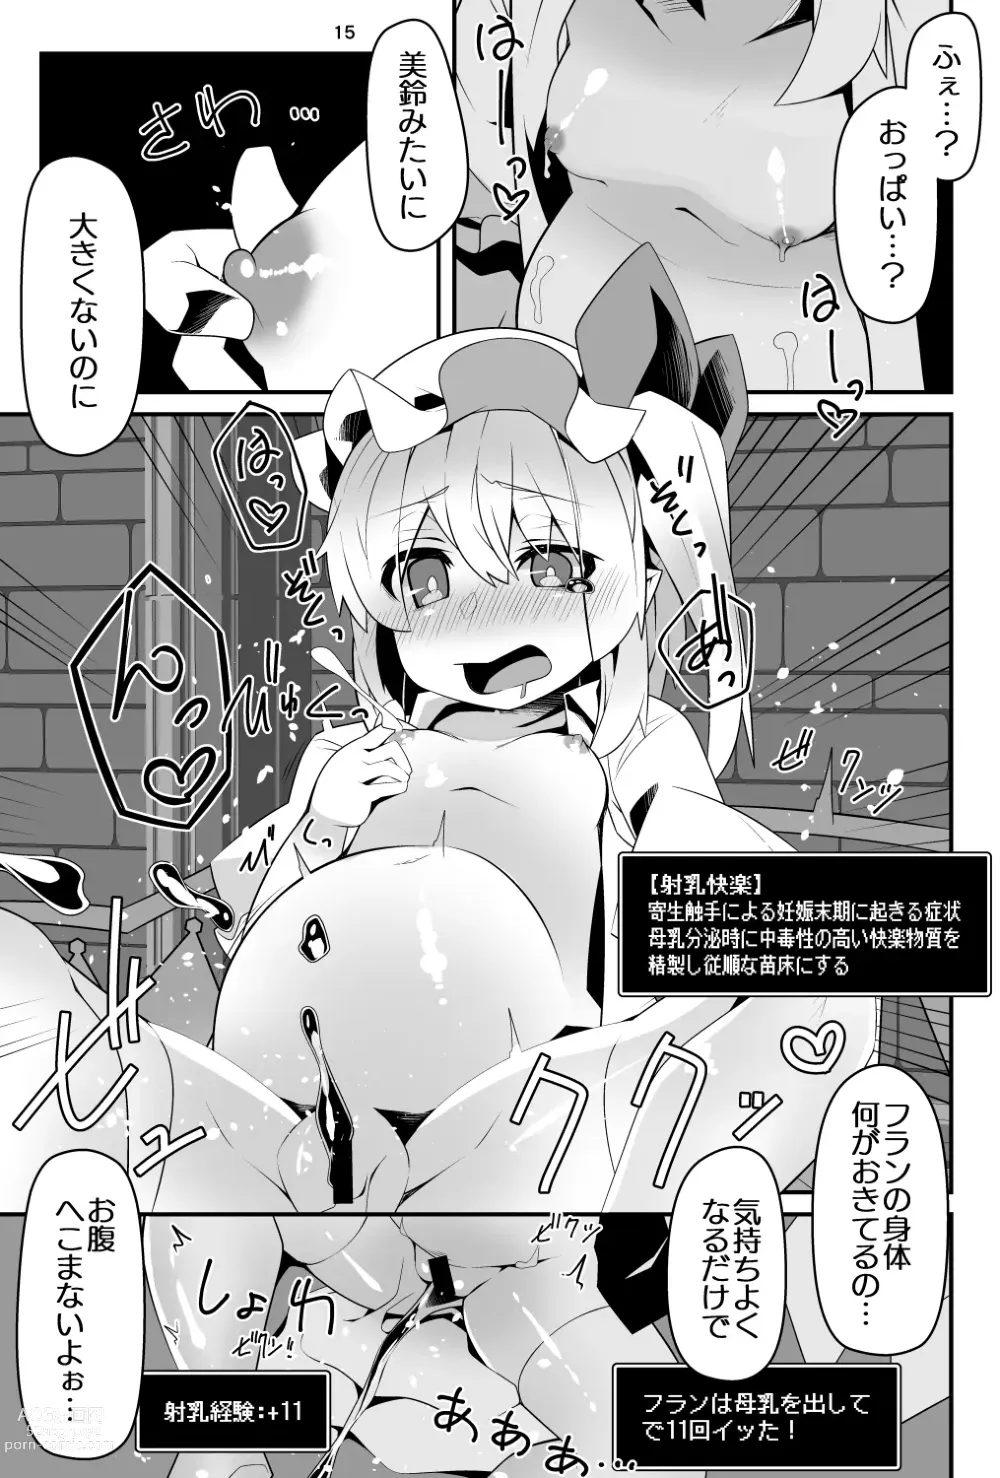 Page 15 of doujinshi Flan-chan no Ero Trap Dungeon Tentacle pregnanT